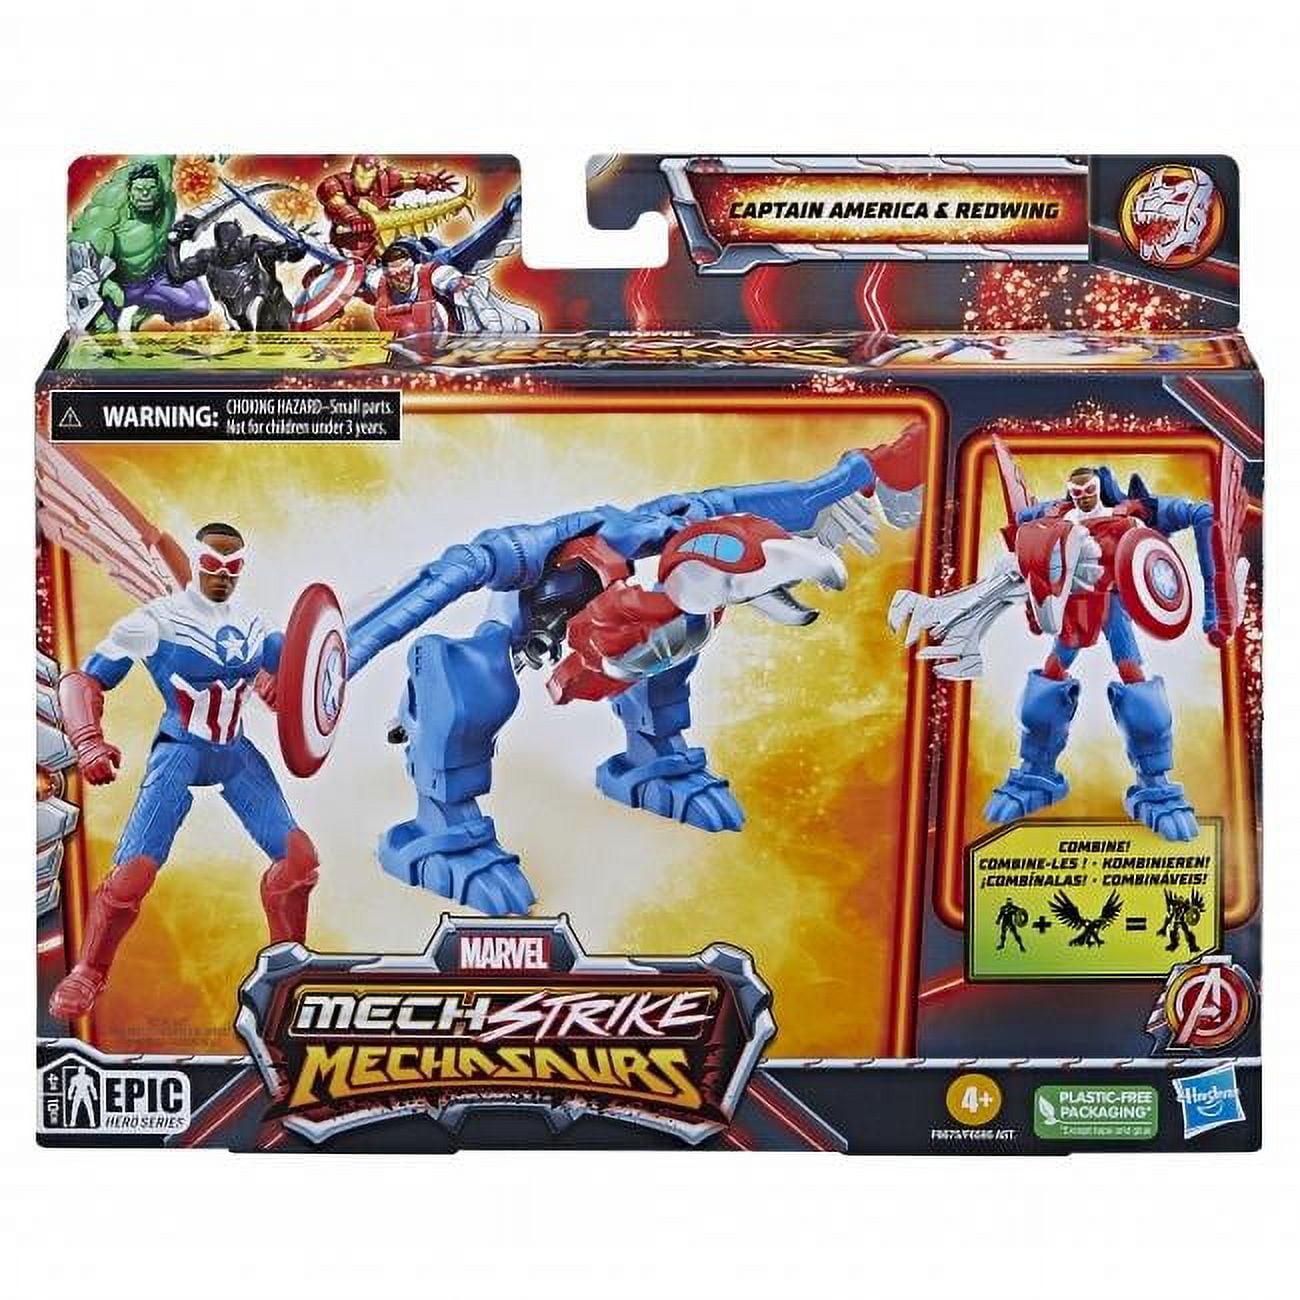 HSBF6595 4 in. Marvel Mech Strike 3.0 Mech Suit Action Figure, Assorted Color - 6 Piece -  HASBRO